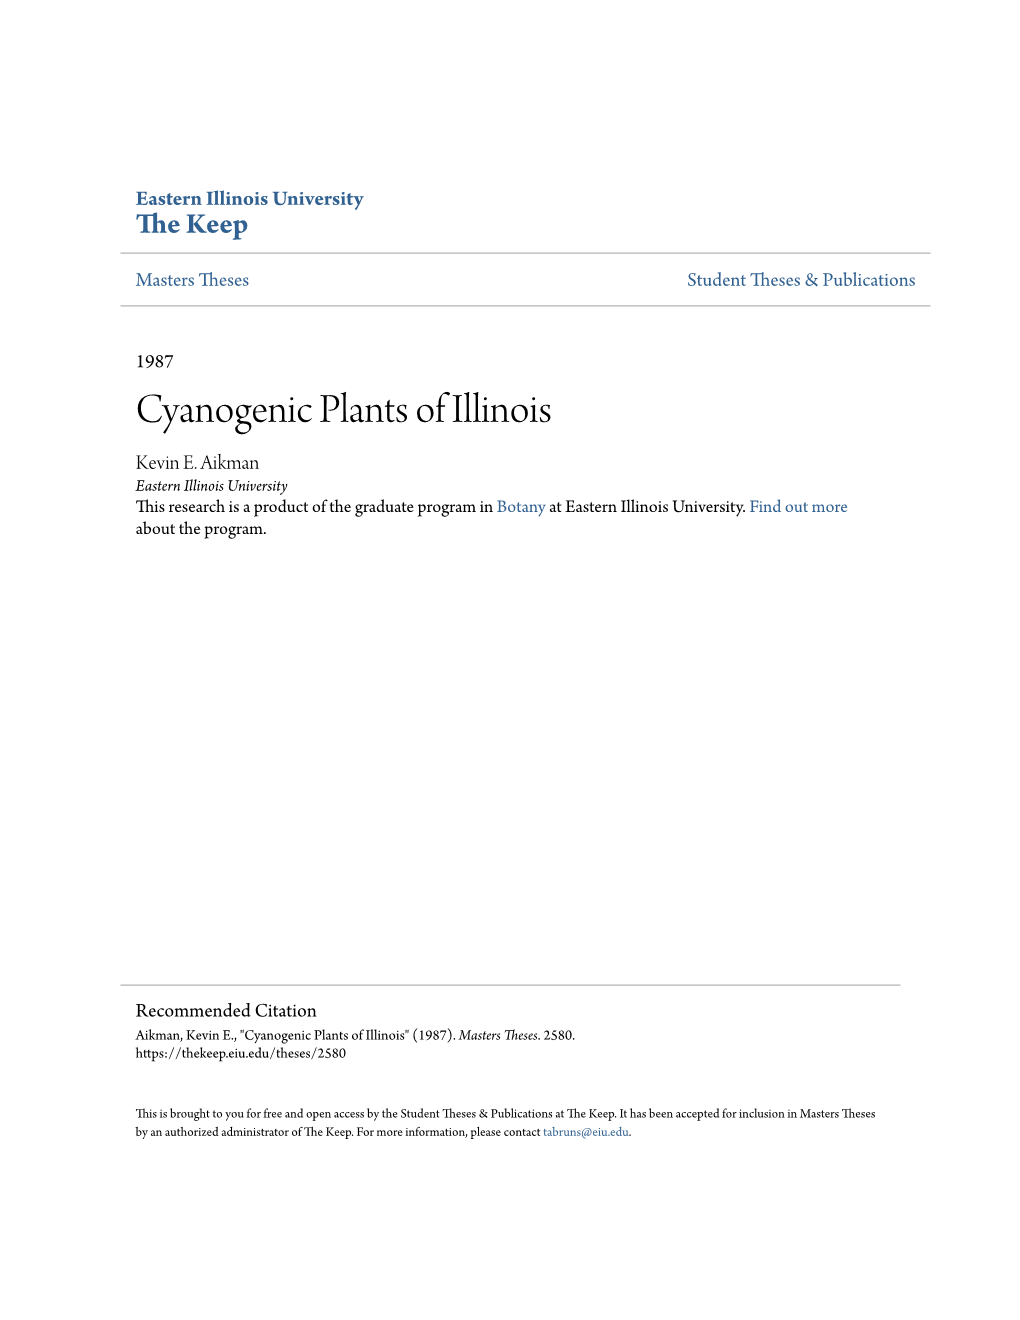 Cyanogenic Plants of Illinois Kevin E